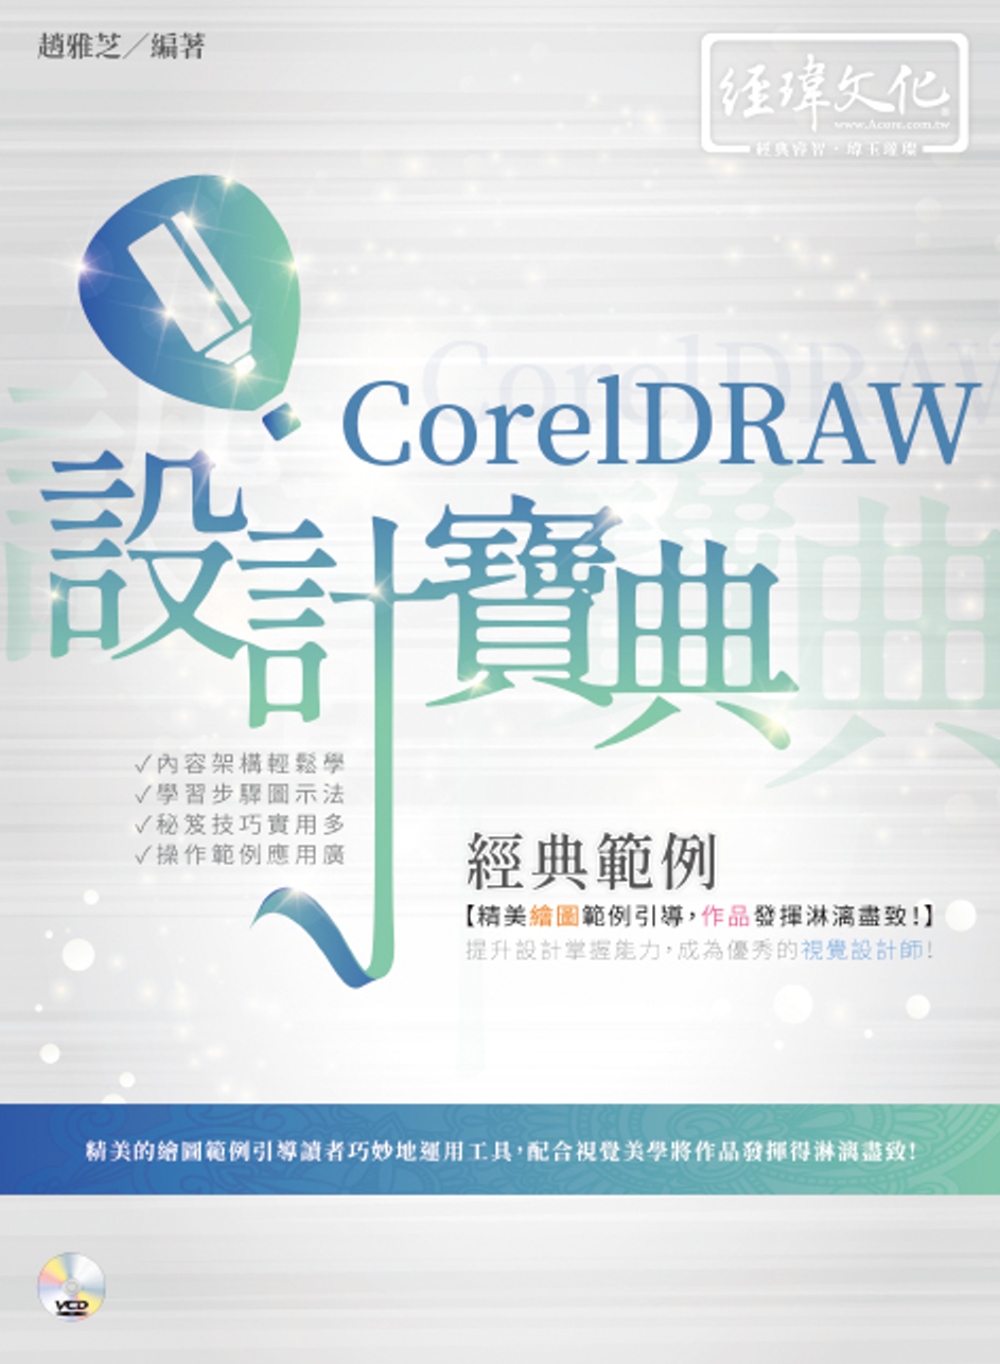 CorelDRAW 經典範例 設計寶典